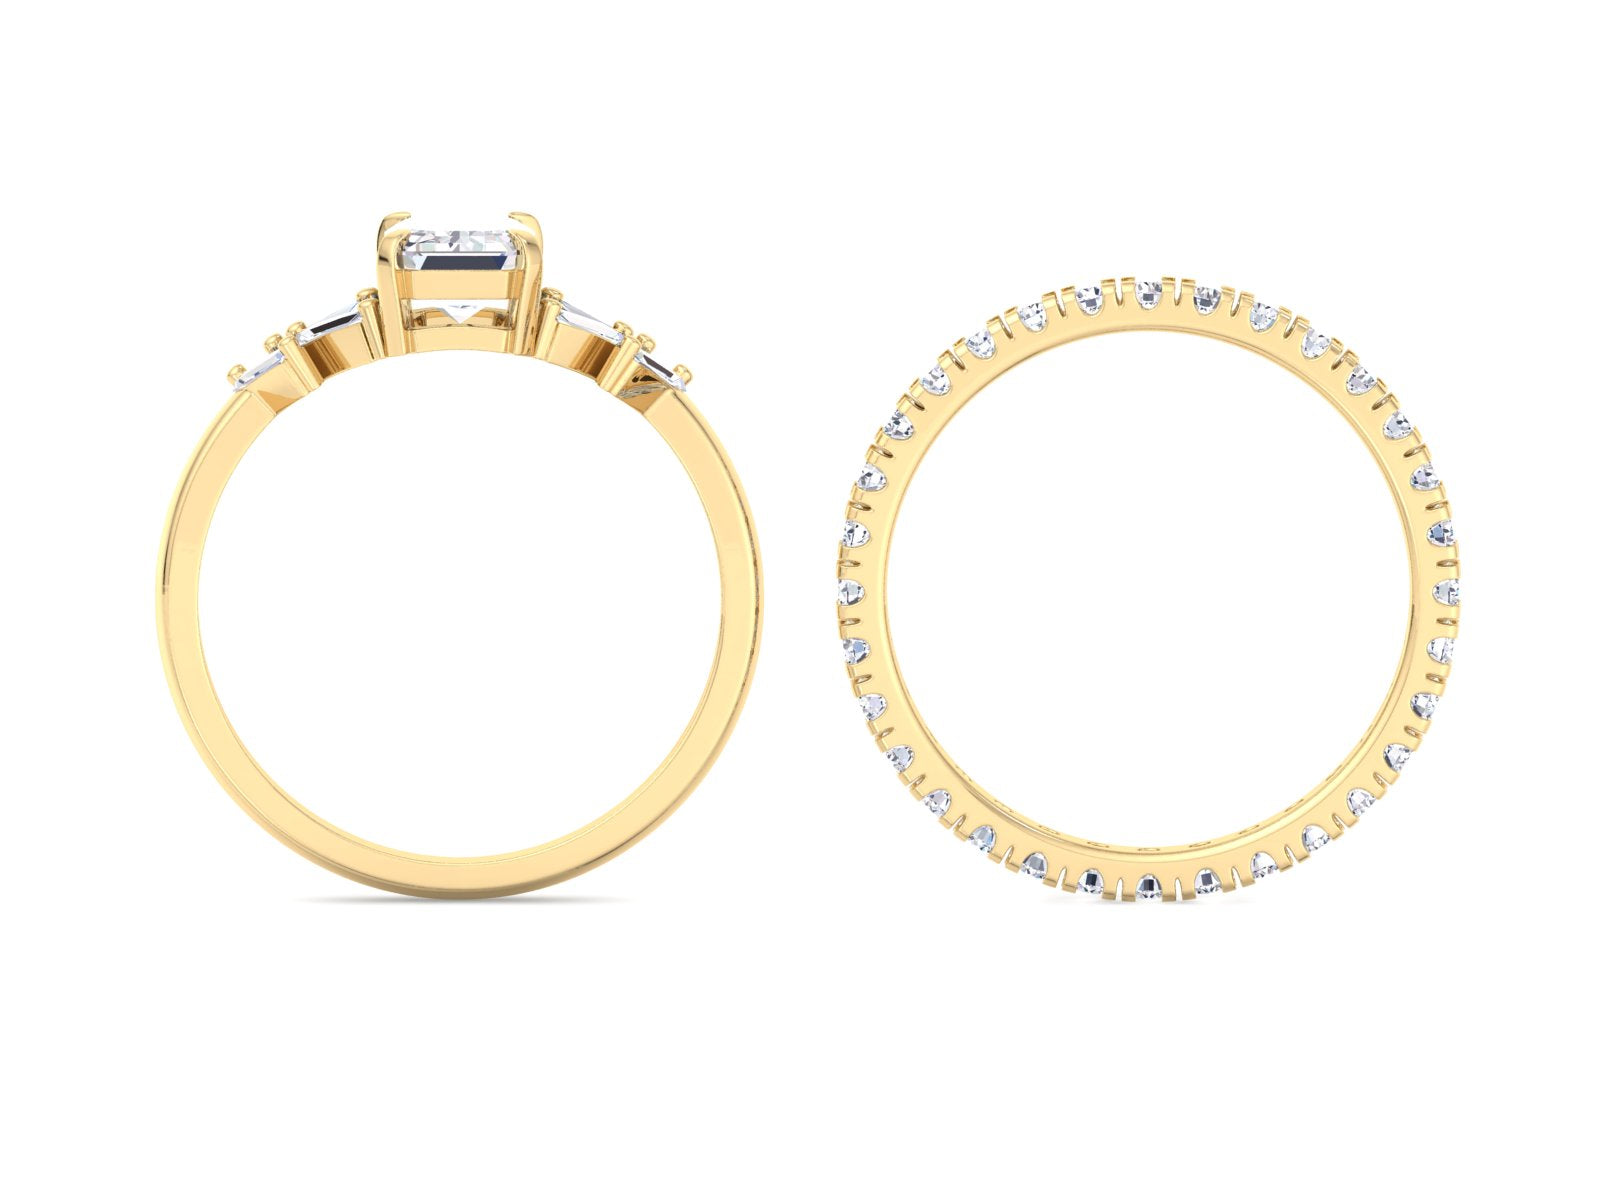 1.00 Carat Lab Grown Emerald Cut Diamond Engagement Ring, Women's Wedding Band Set